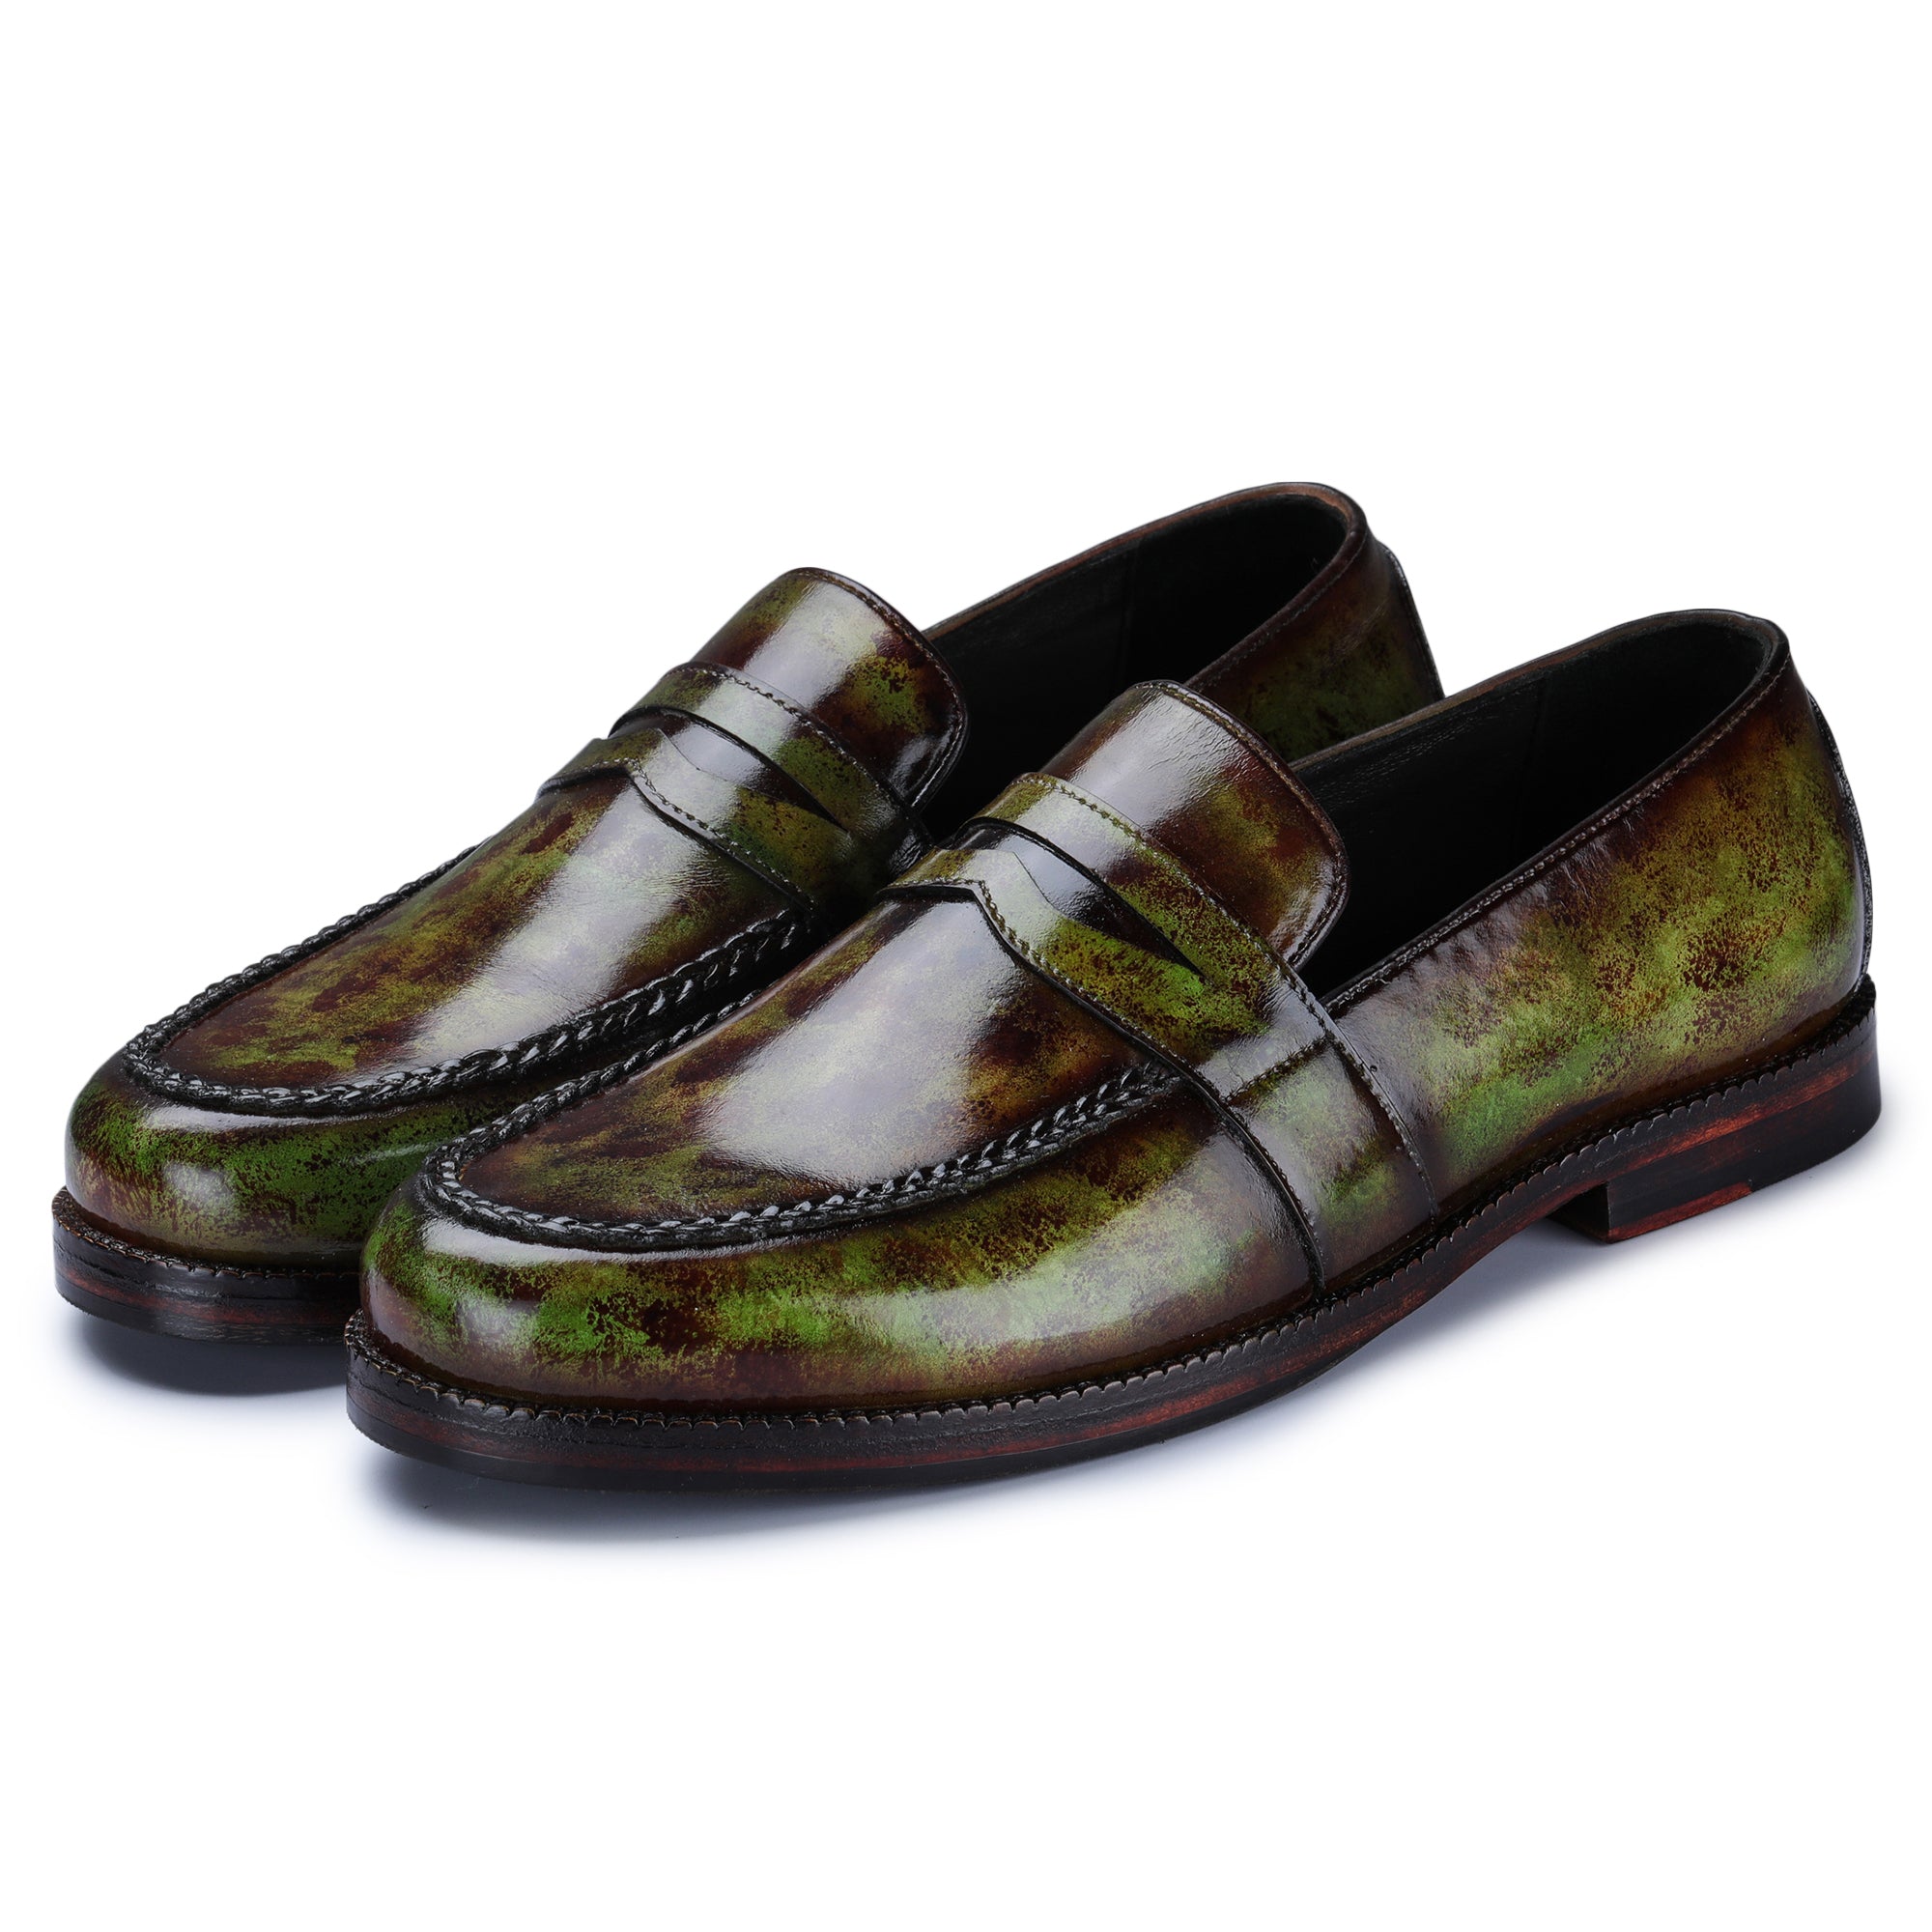 Prada Men's Solid Alligator Dress Shoes